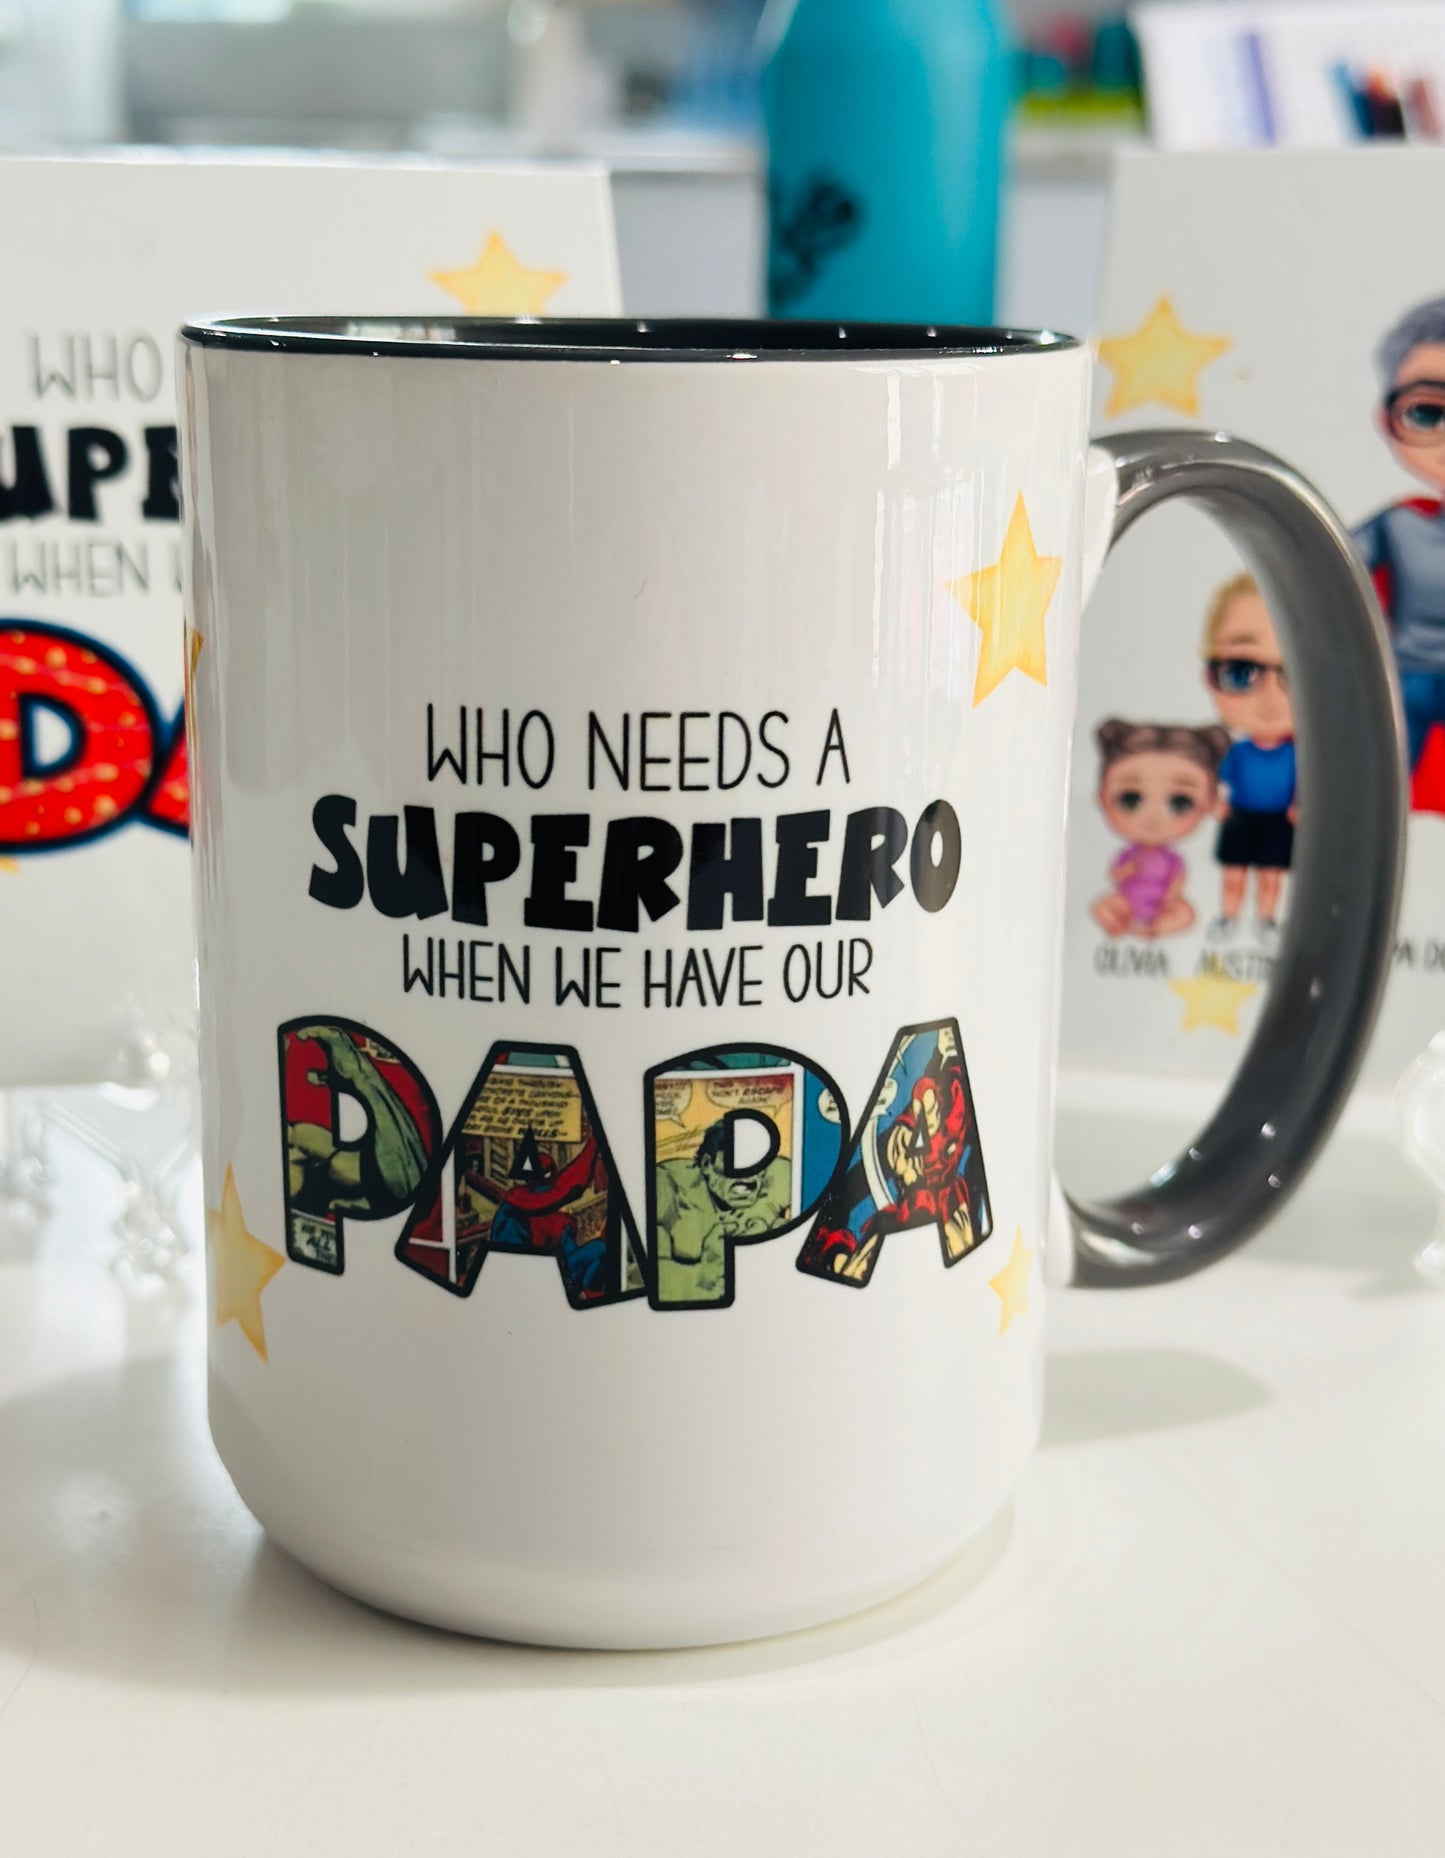 Male Superhero Personalized Coffee Mug